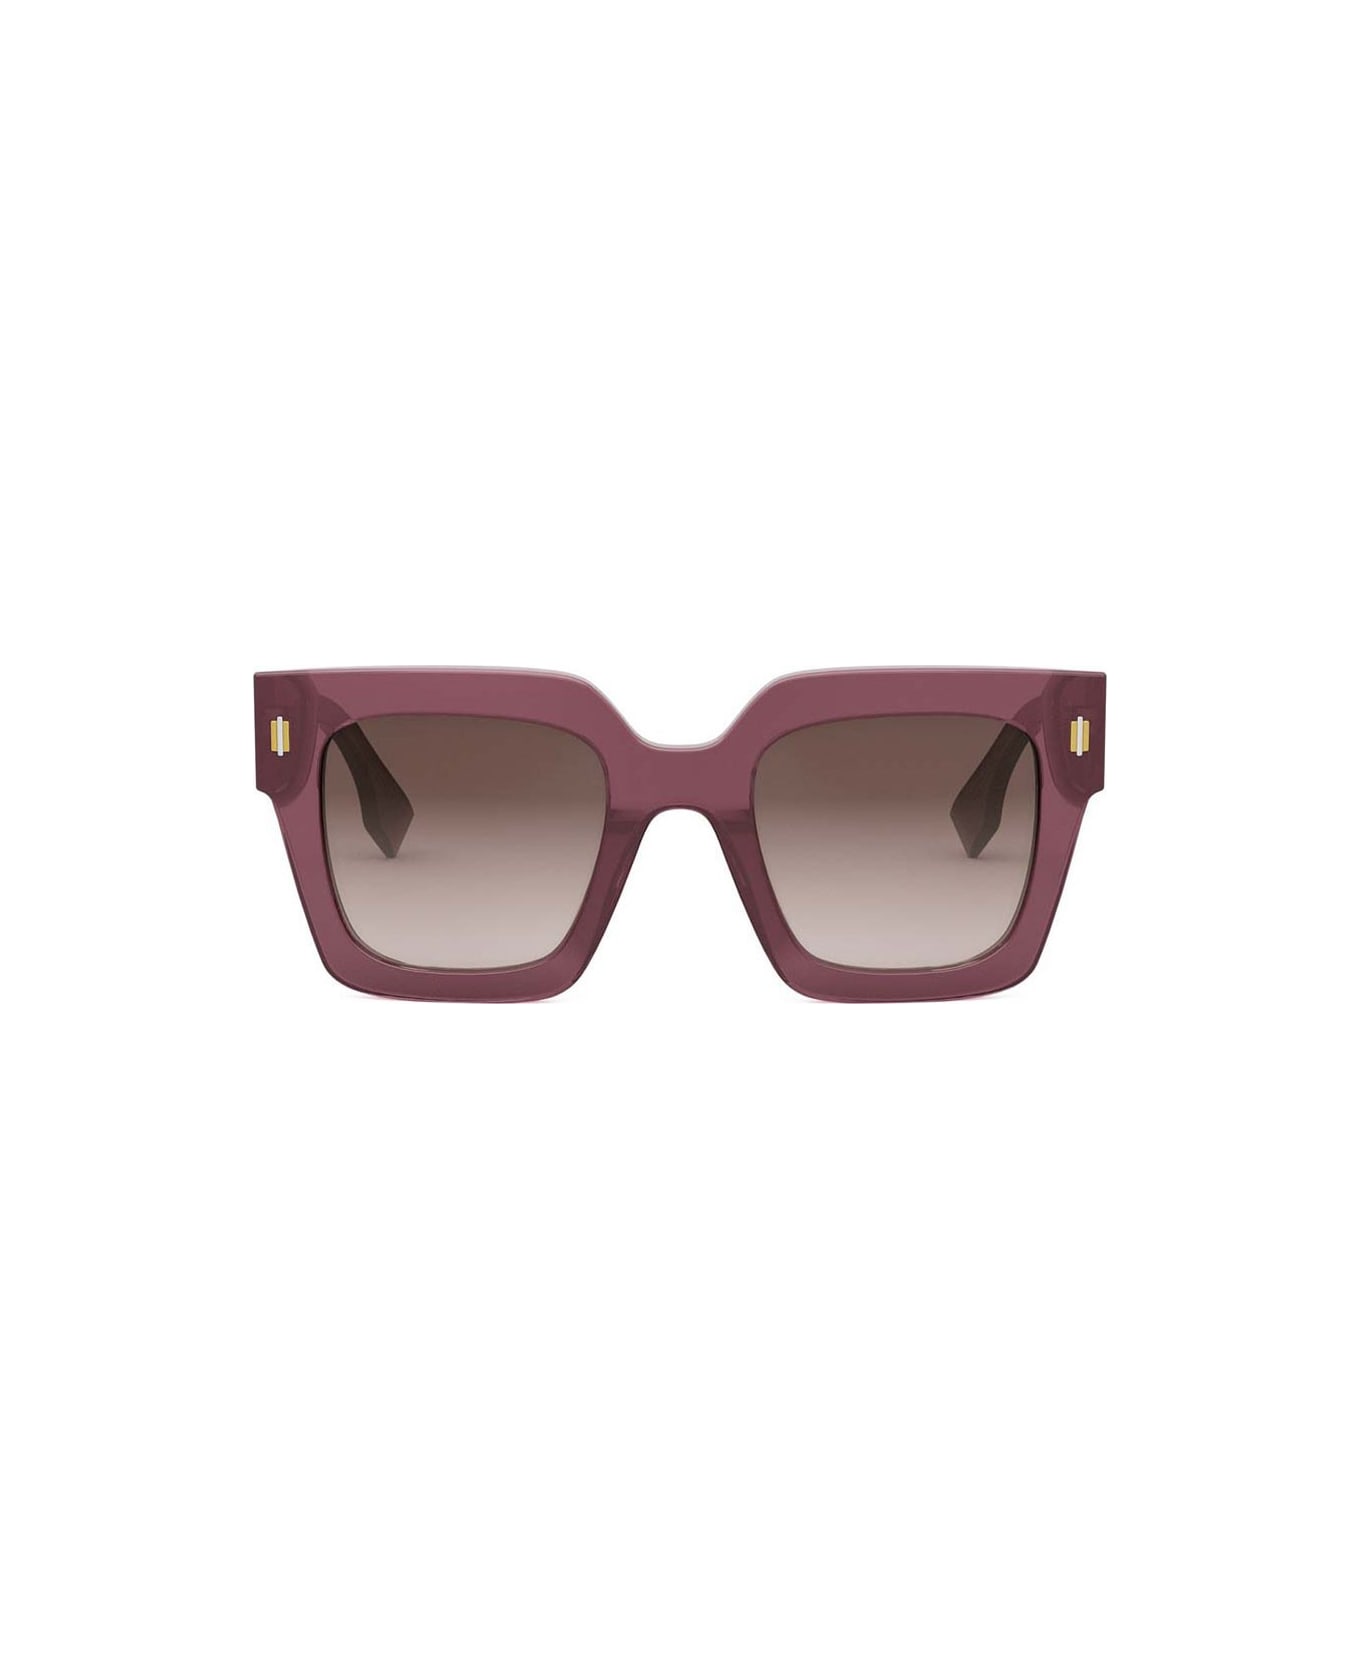 Optic vision - F is Fendi #sunglasses #fashion #fisfendi #fendi  #fendisunglasses #accessories #style #womansfashion #mansfashion #fashion  #fashionworld #originalsunglasses #offer #discount #lebanonsunglasses  #lebanonsunglasses #lebanesebeauty